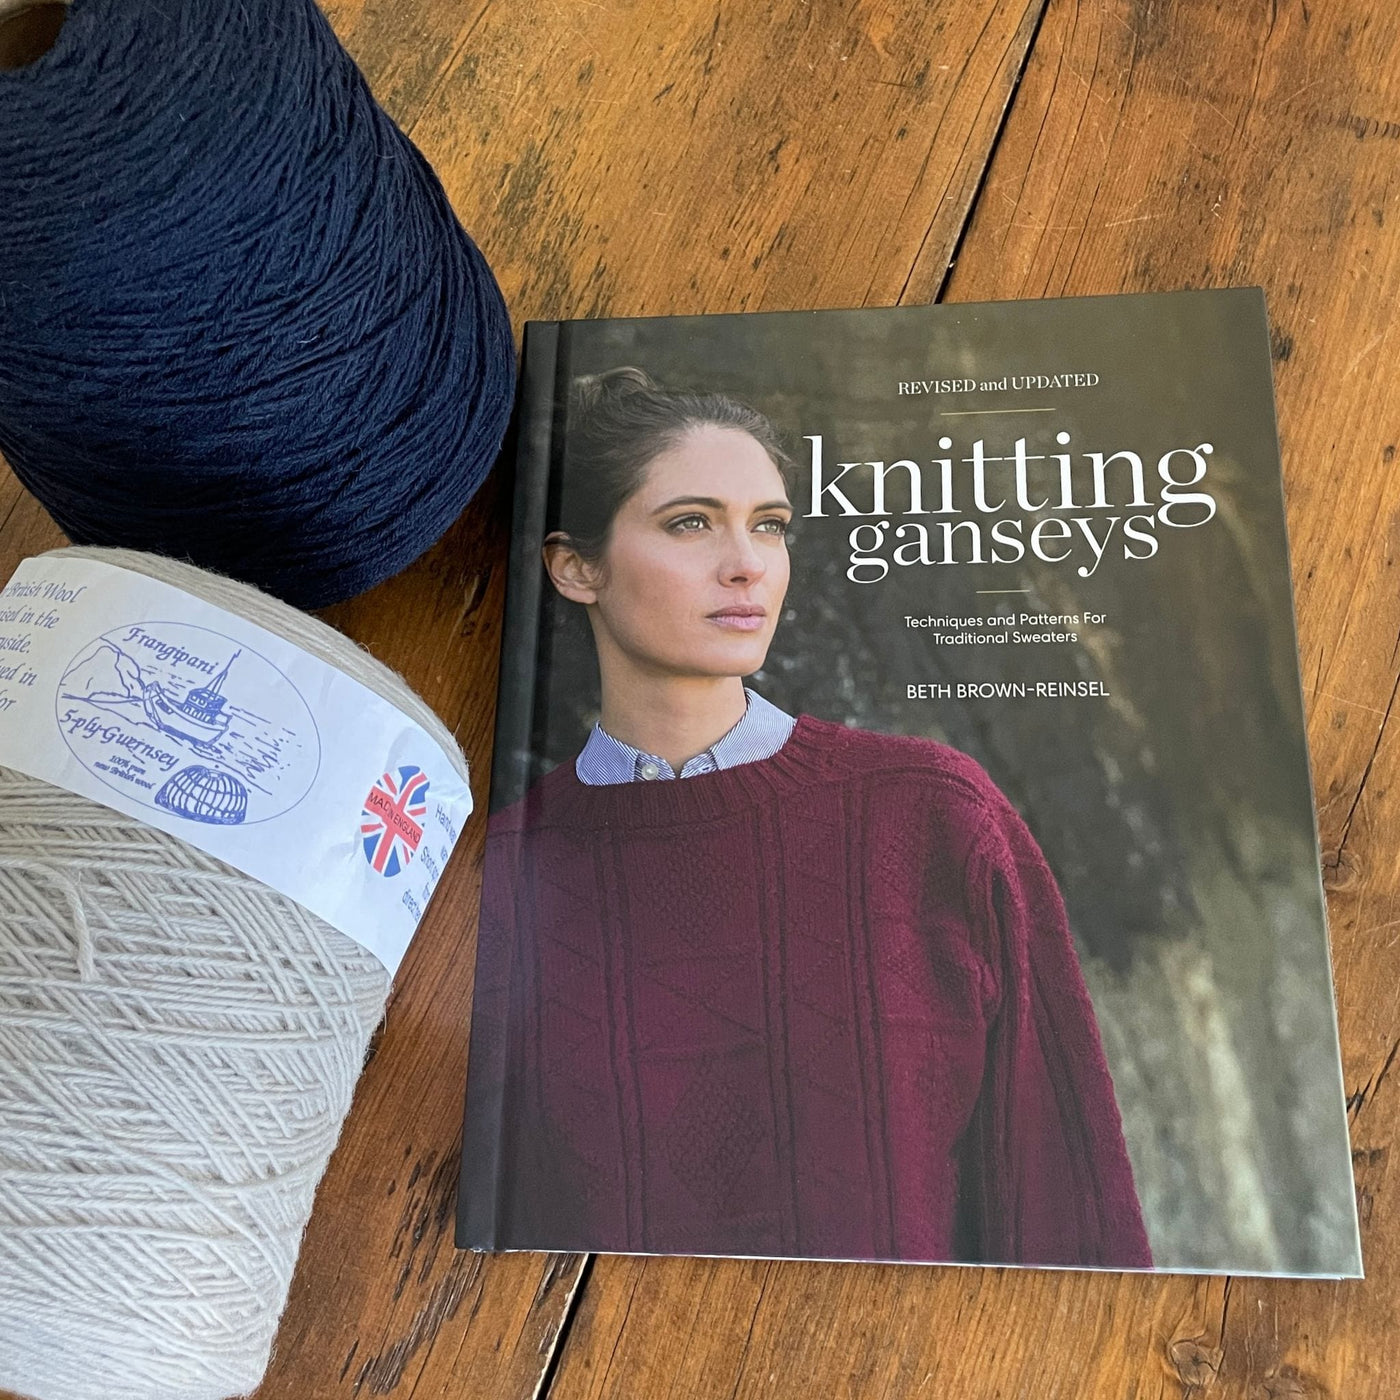 Knitting Ganseys by Beth Brown-Reinsel